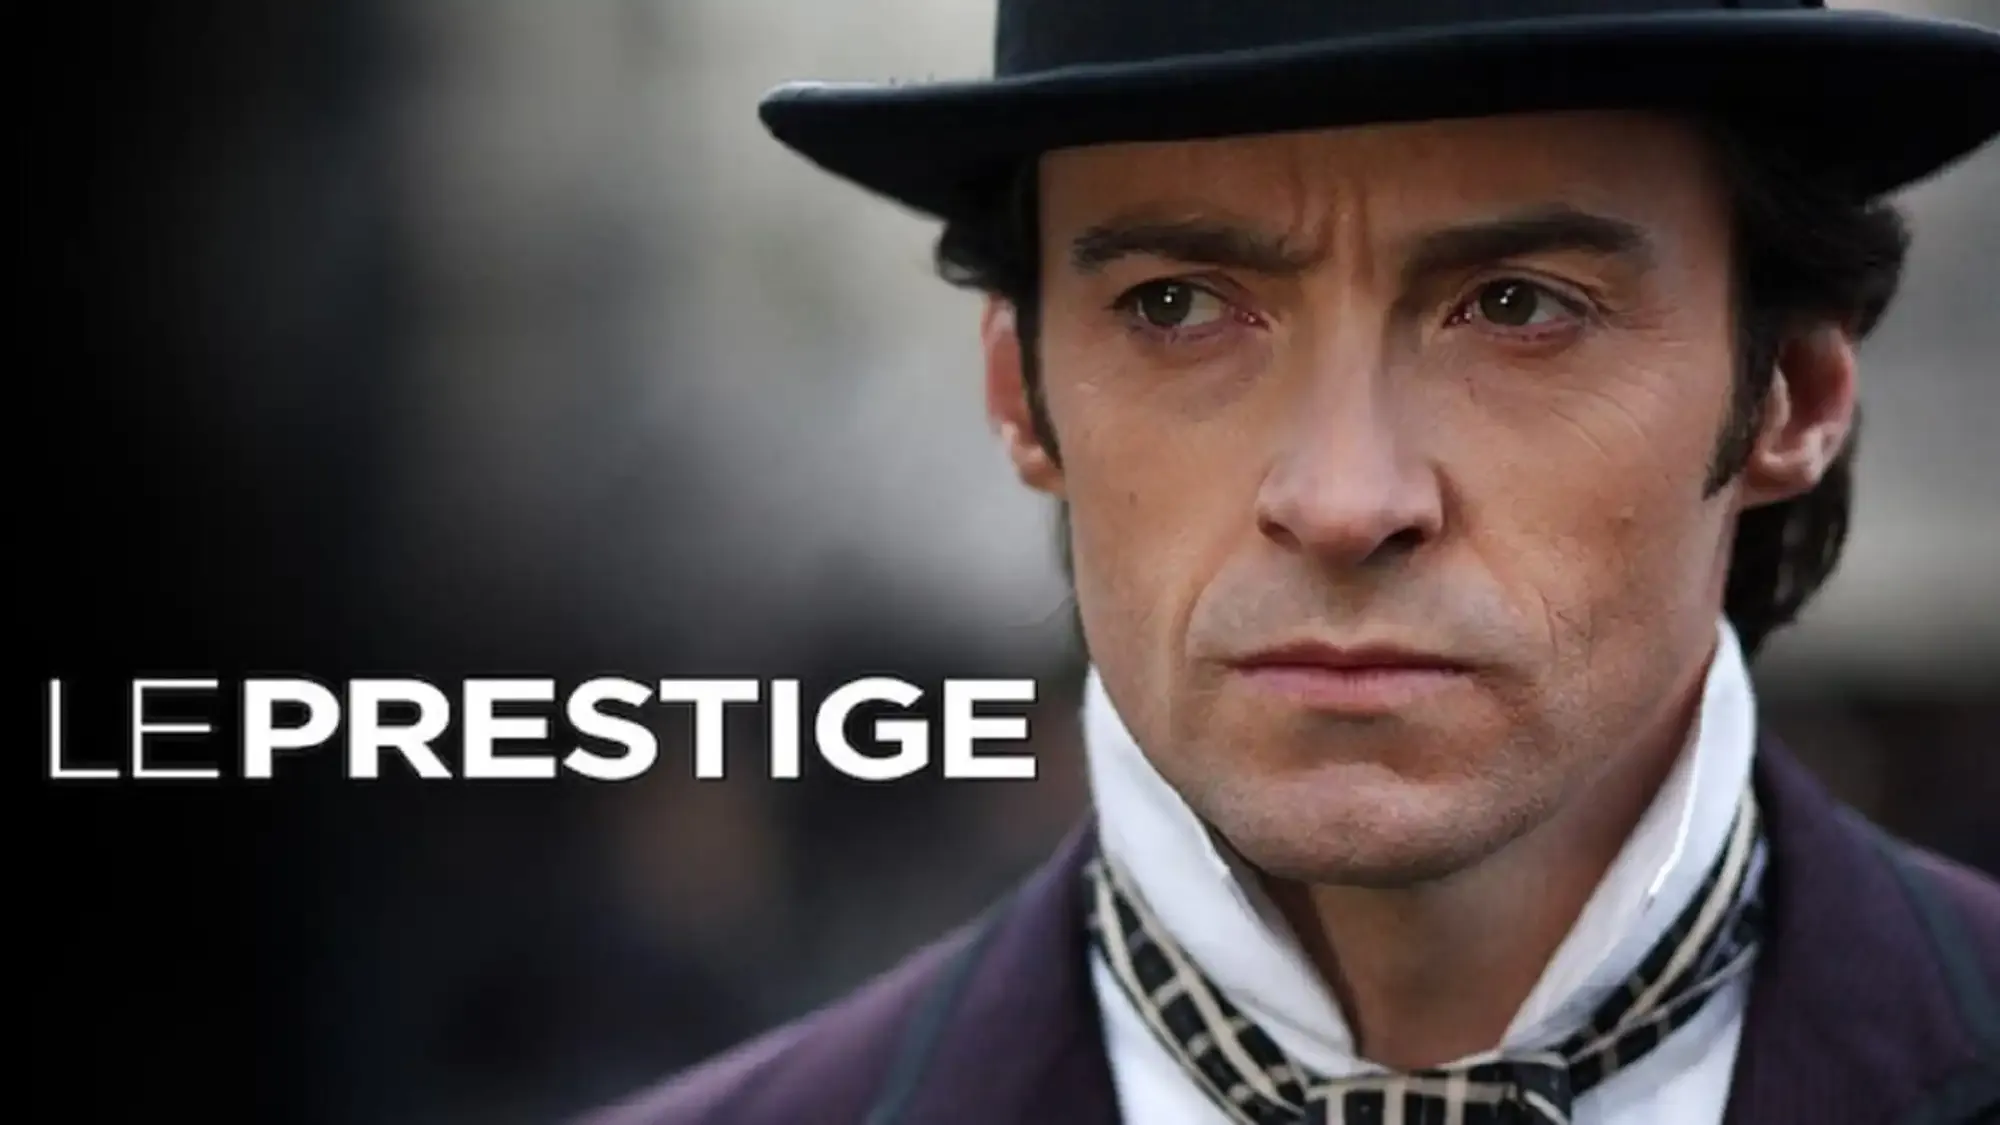 The Prestige movie review